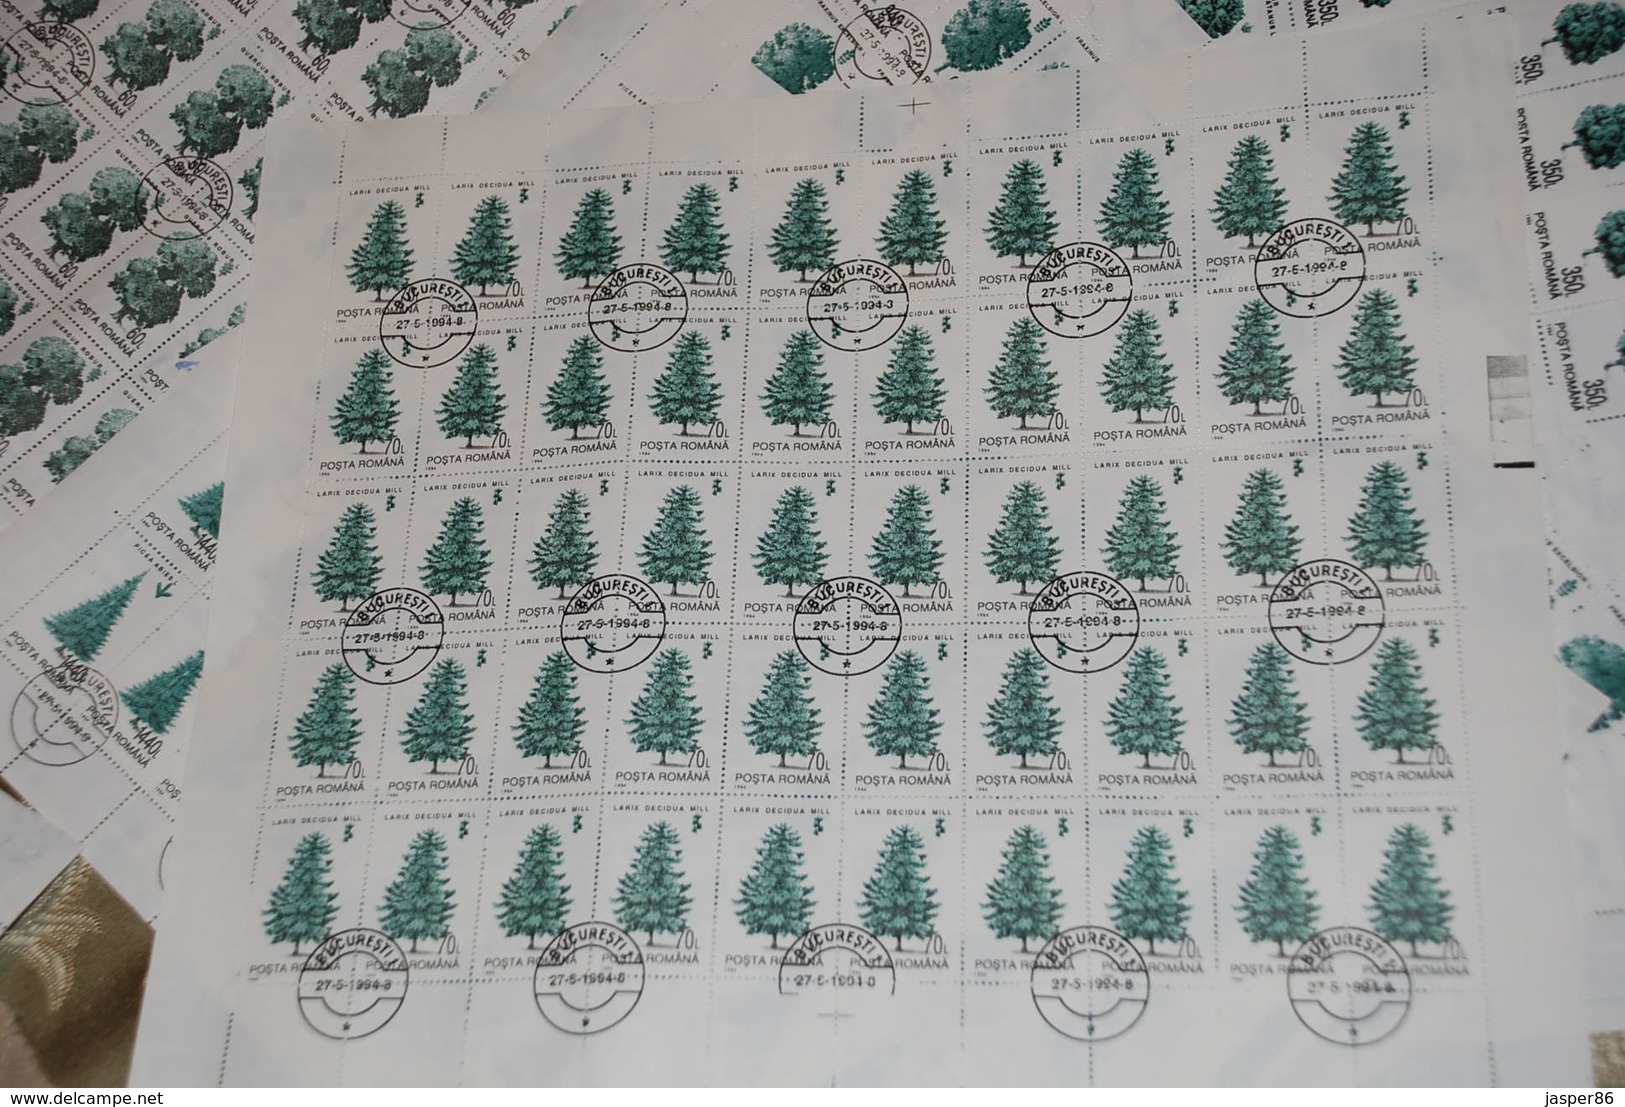 ROMANIA 500 TREES Sc 3913-3922, 50 X Complete SETS Wholesale CV$110.00 - Full Sheets & Multiples